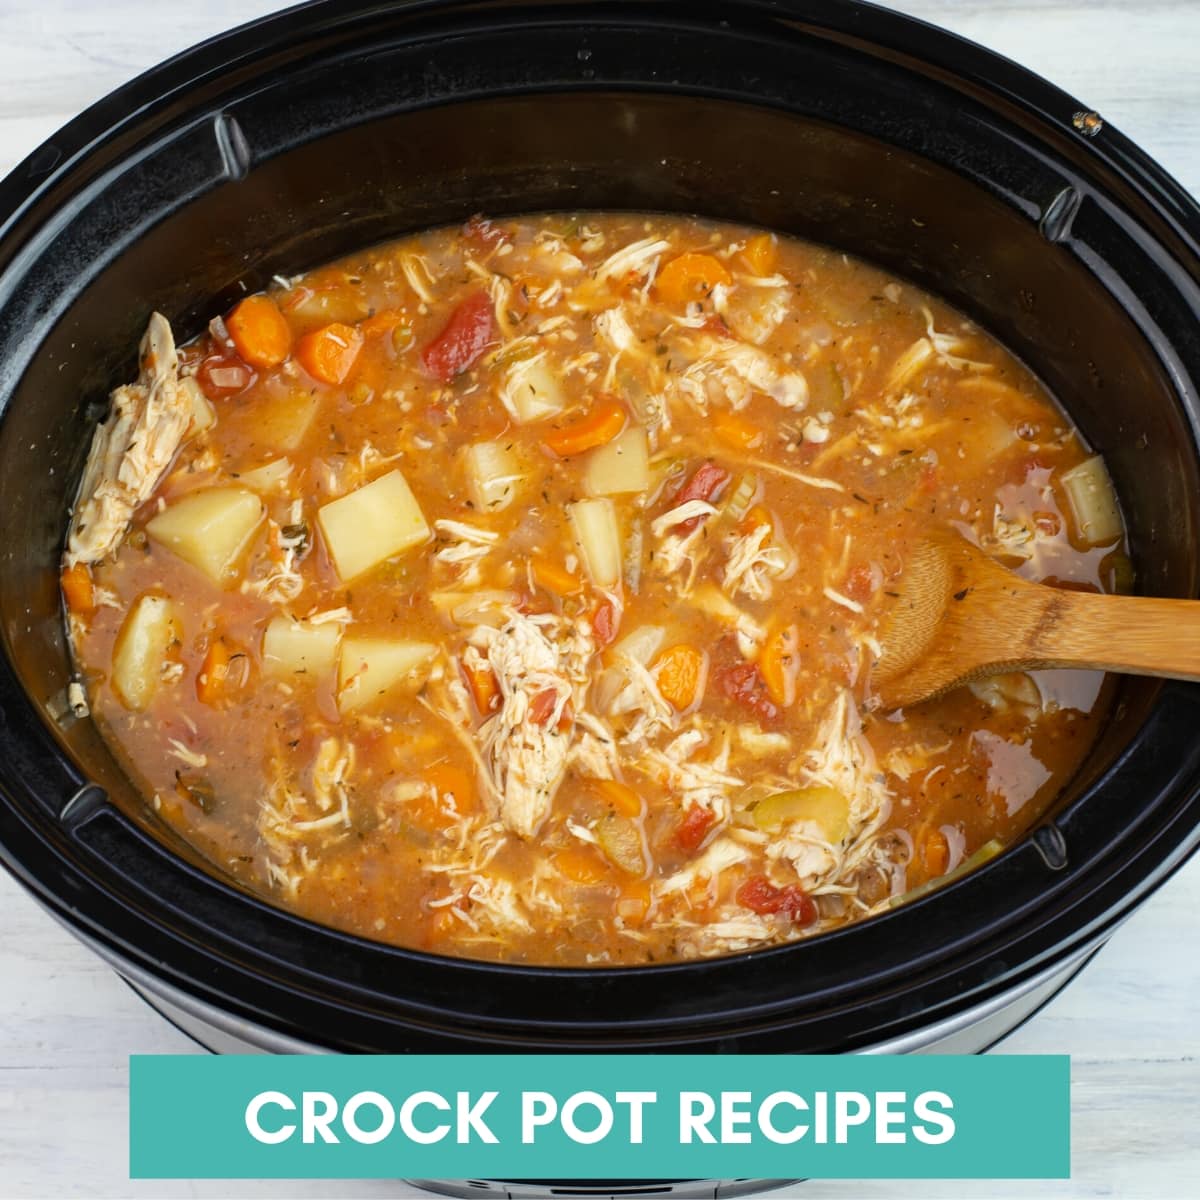 crock pot recipes category image